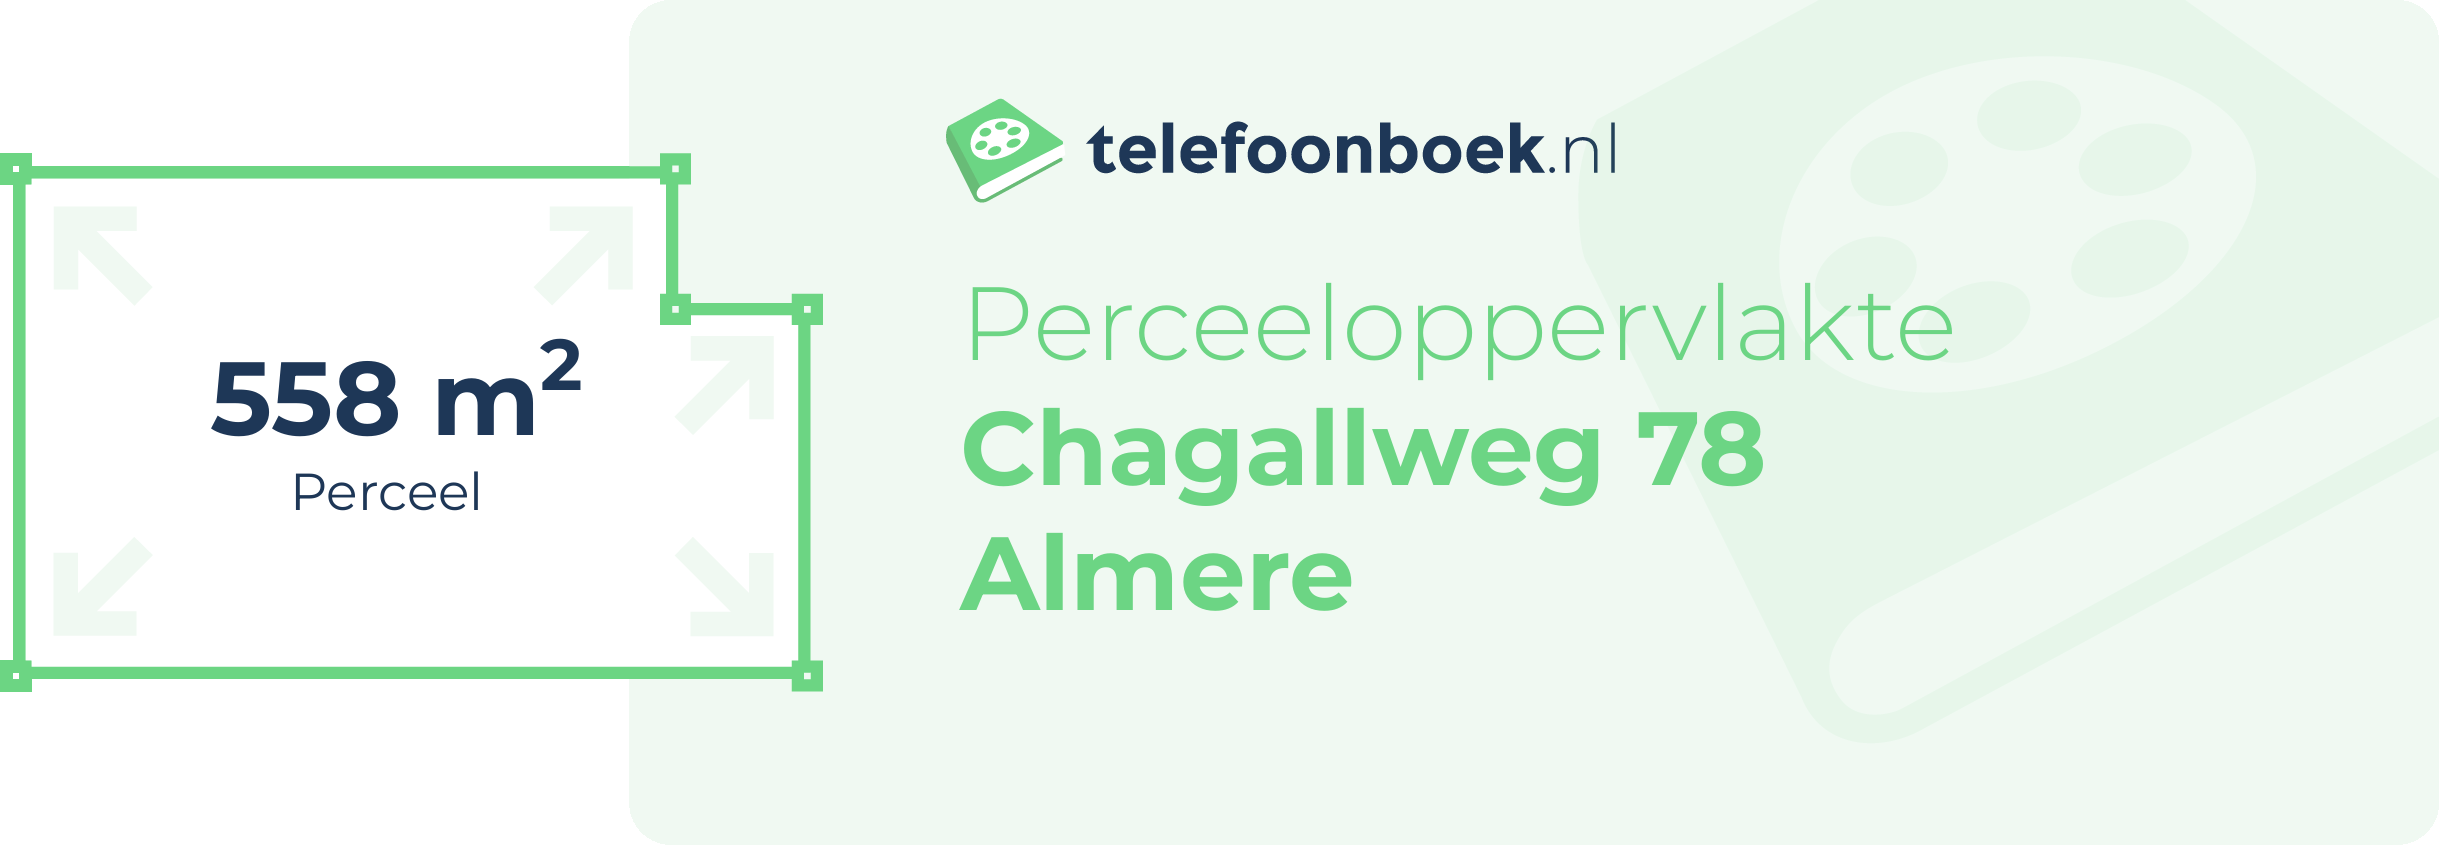 Perceeloppervlakte Chagallweg 78 Almere